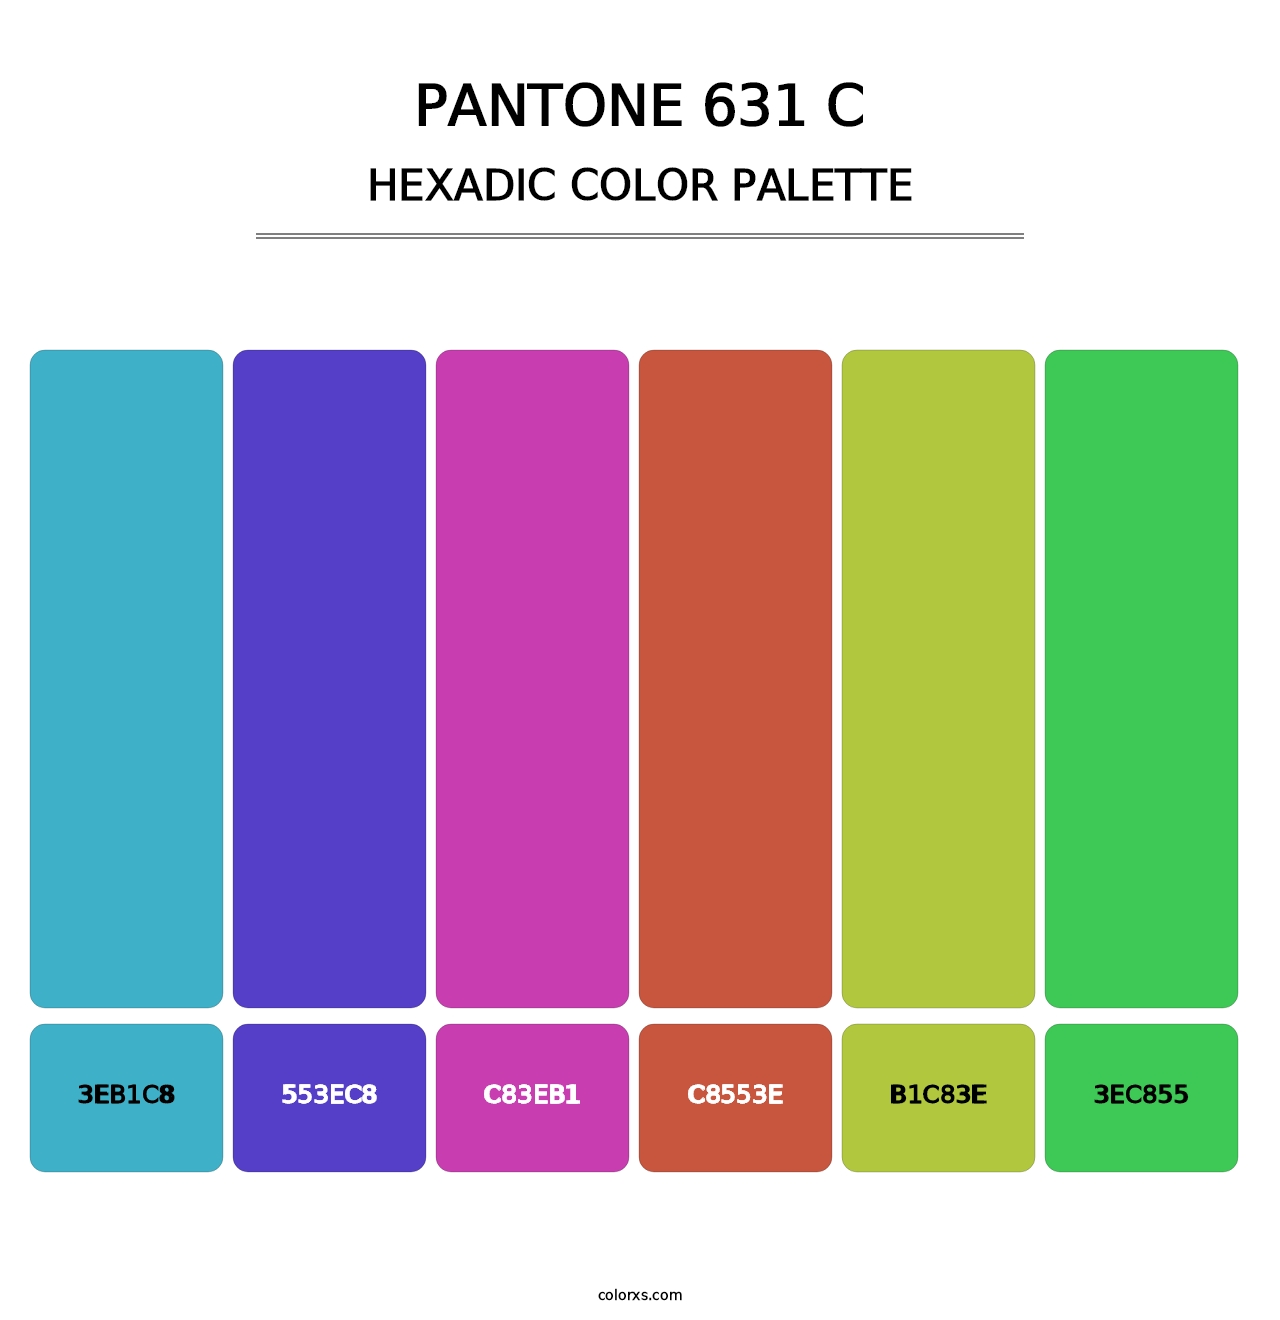 PANTONE 631 C - Hexadic Color Palette